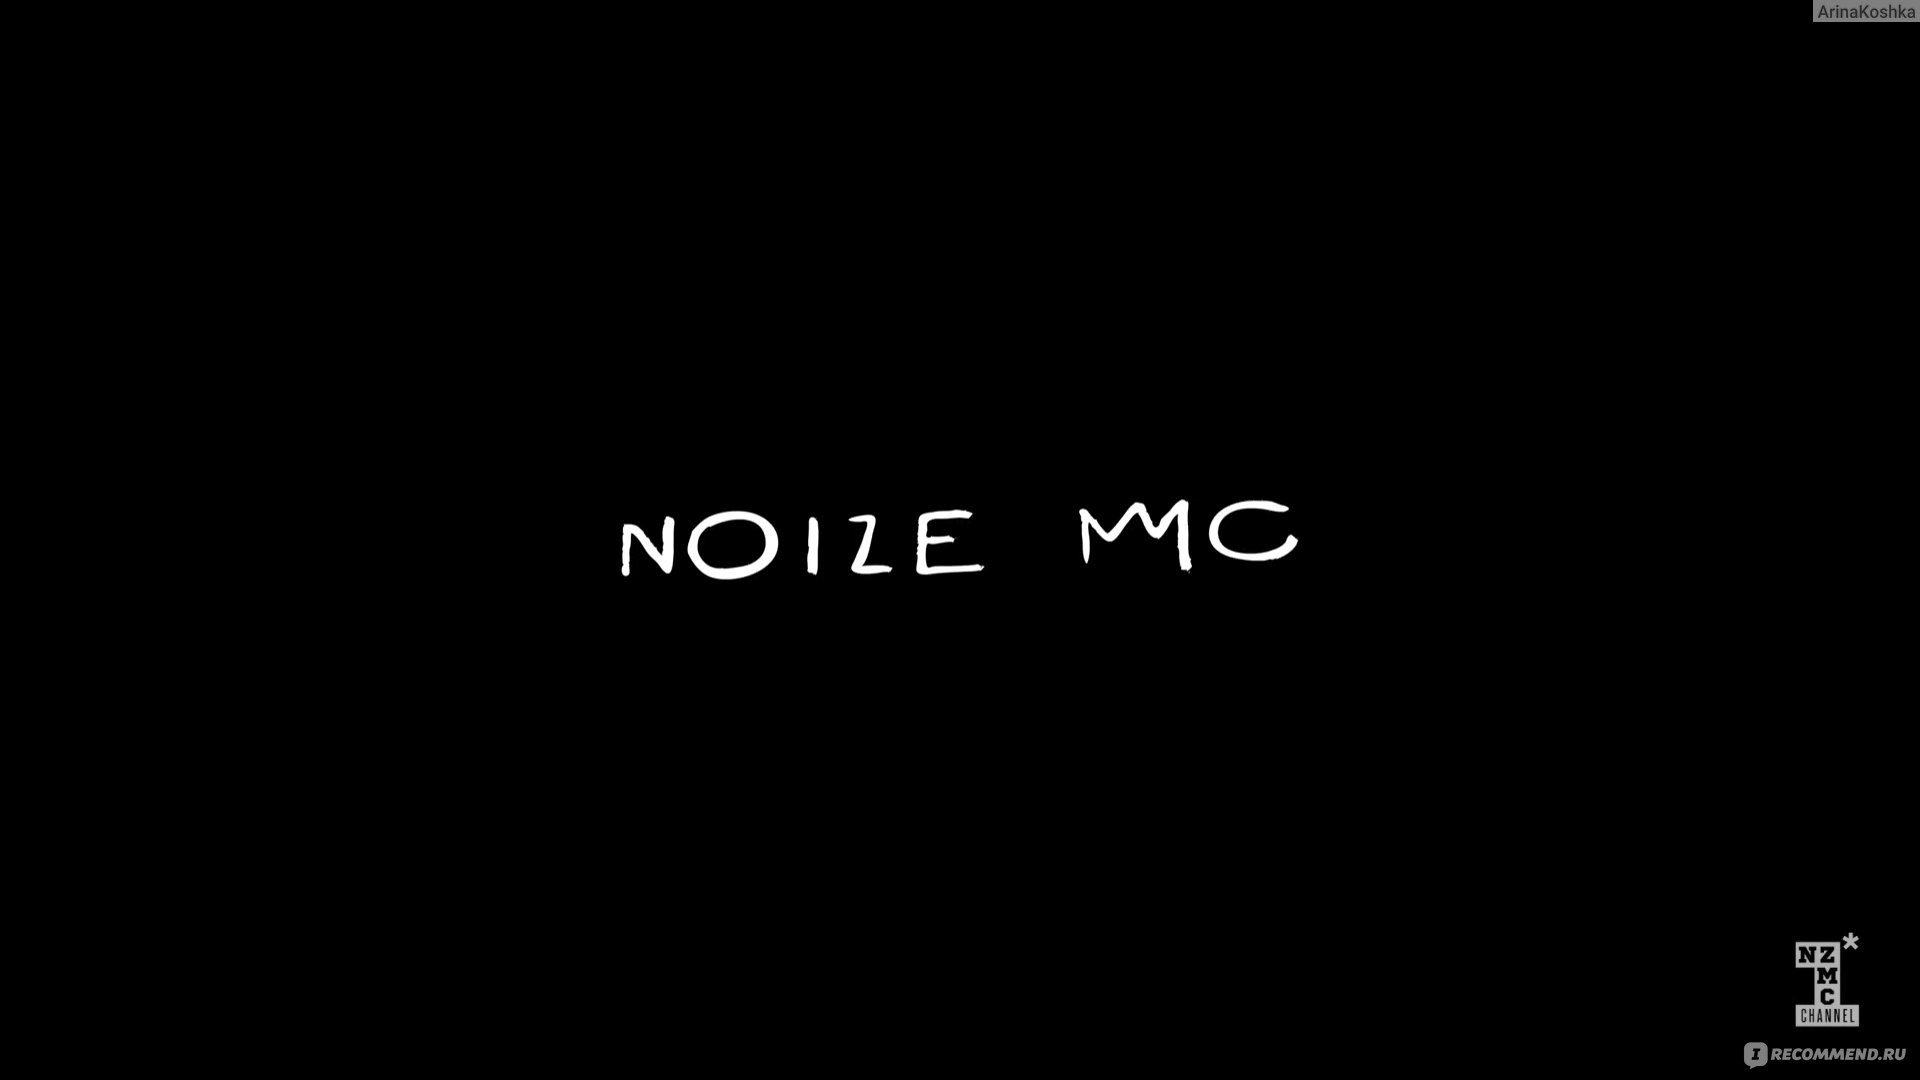 Noize Mc Wallpapers